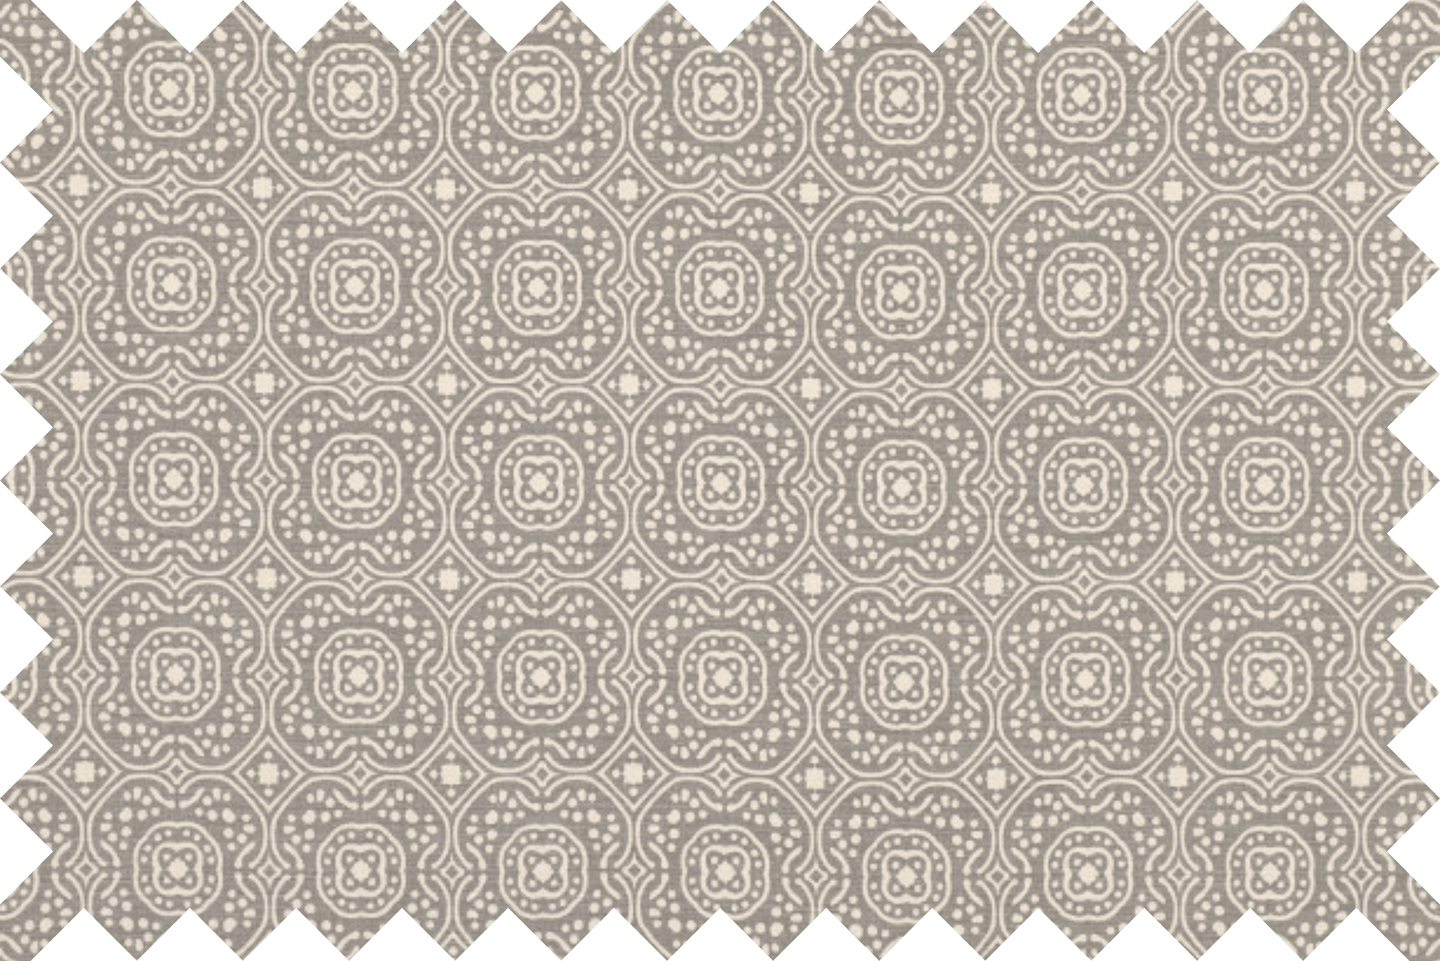 Naturalmat Fabric Sample Quail (Chella)